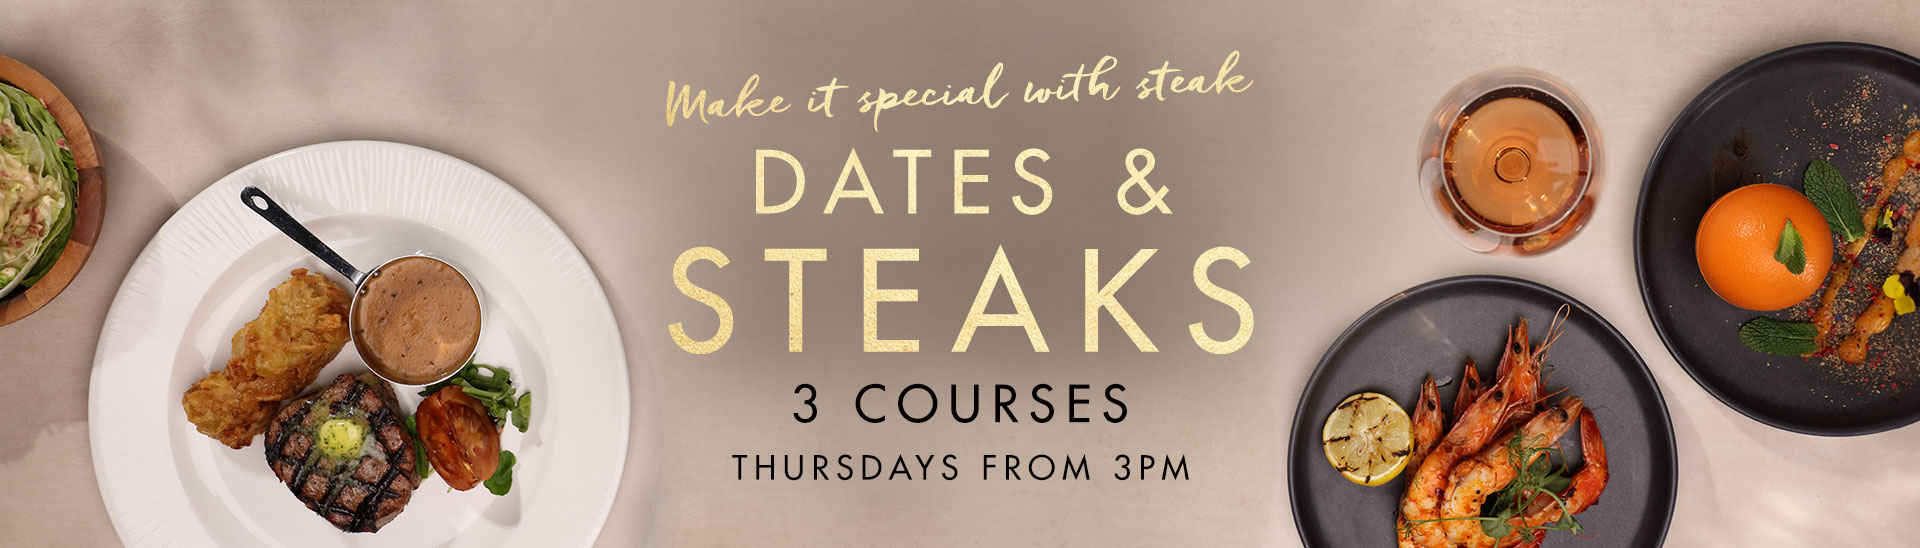 Dates & Steaks at Miller & Carter Newbury Park